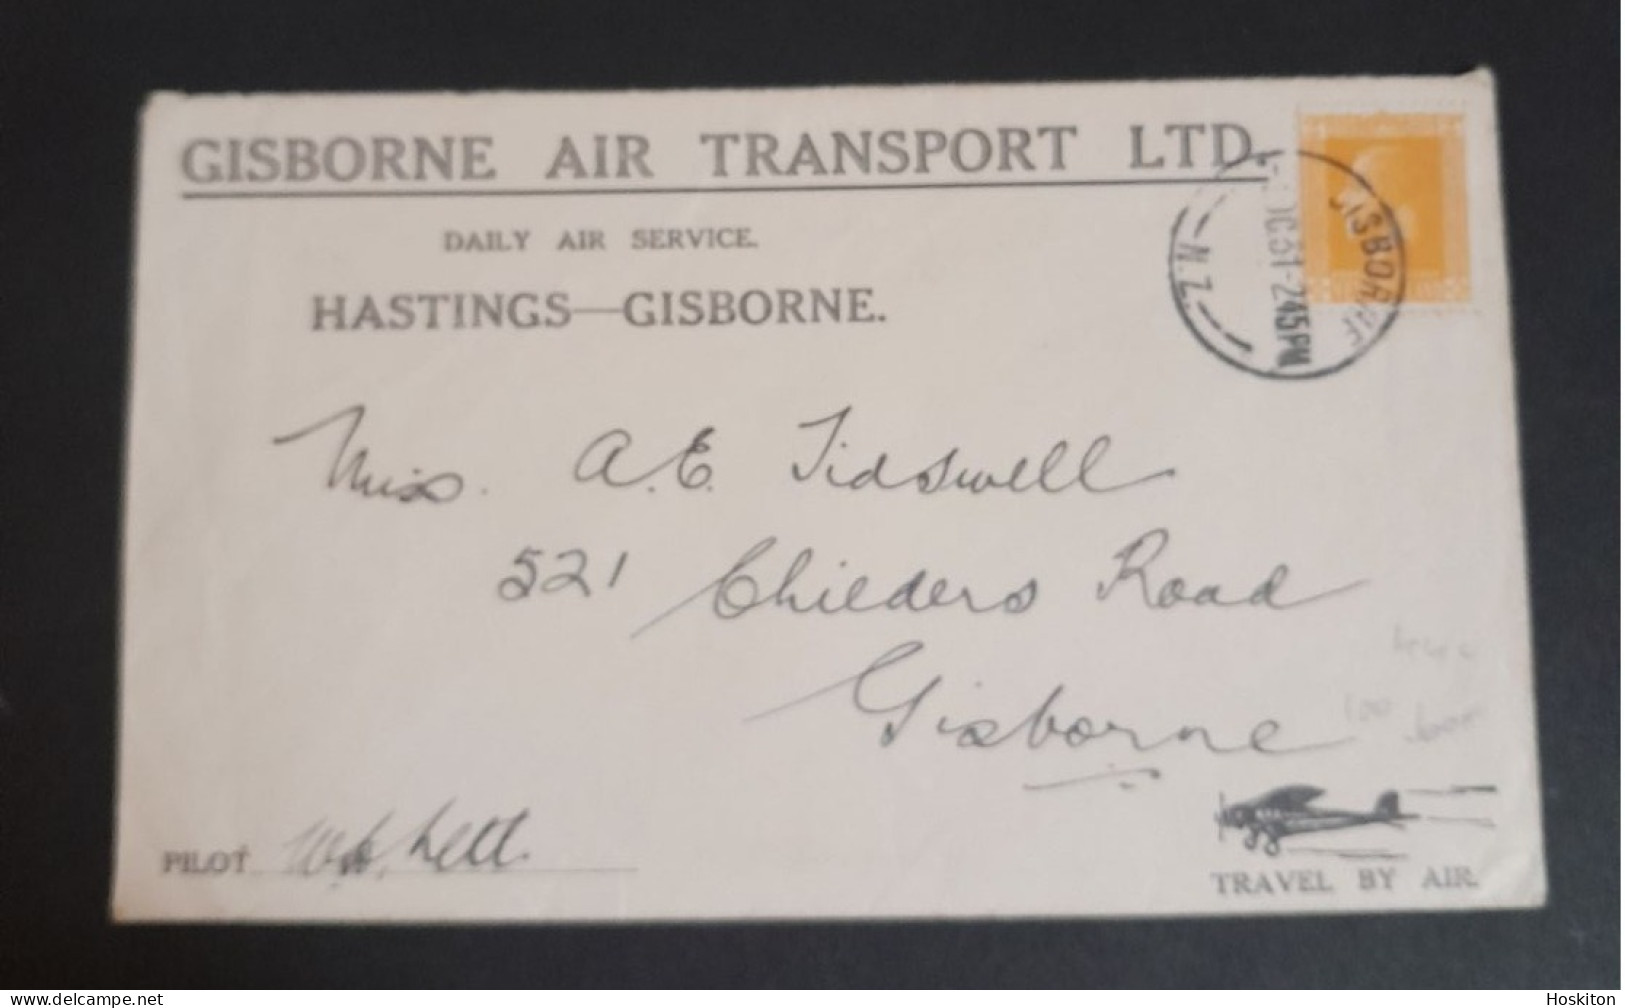 Cisborne Air Transport Ltd Hastings Gisborne Special Printed Cover. - Covers & Documents